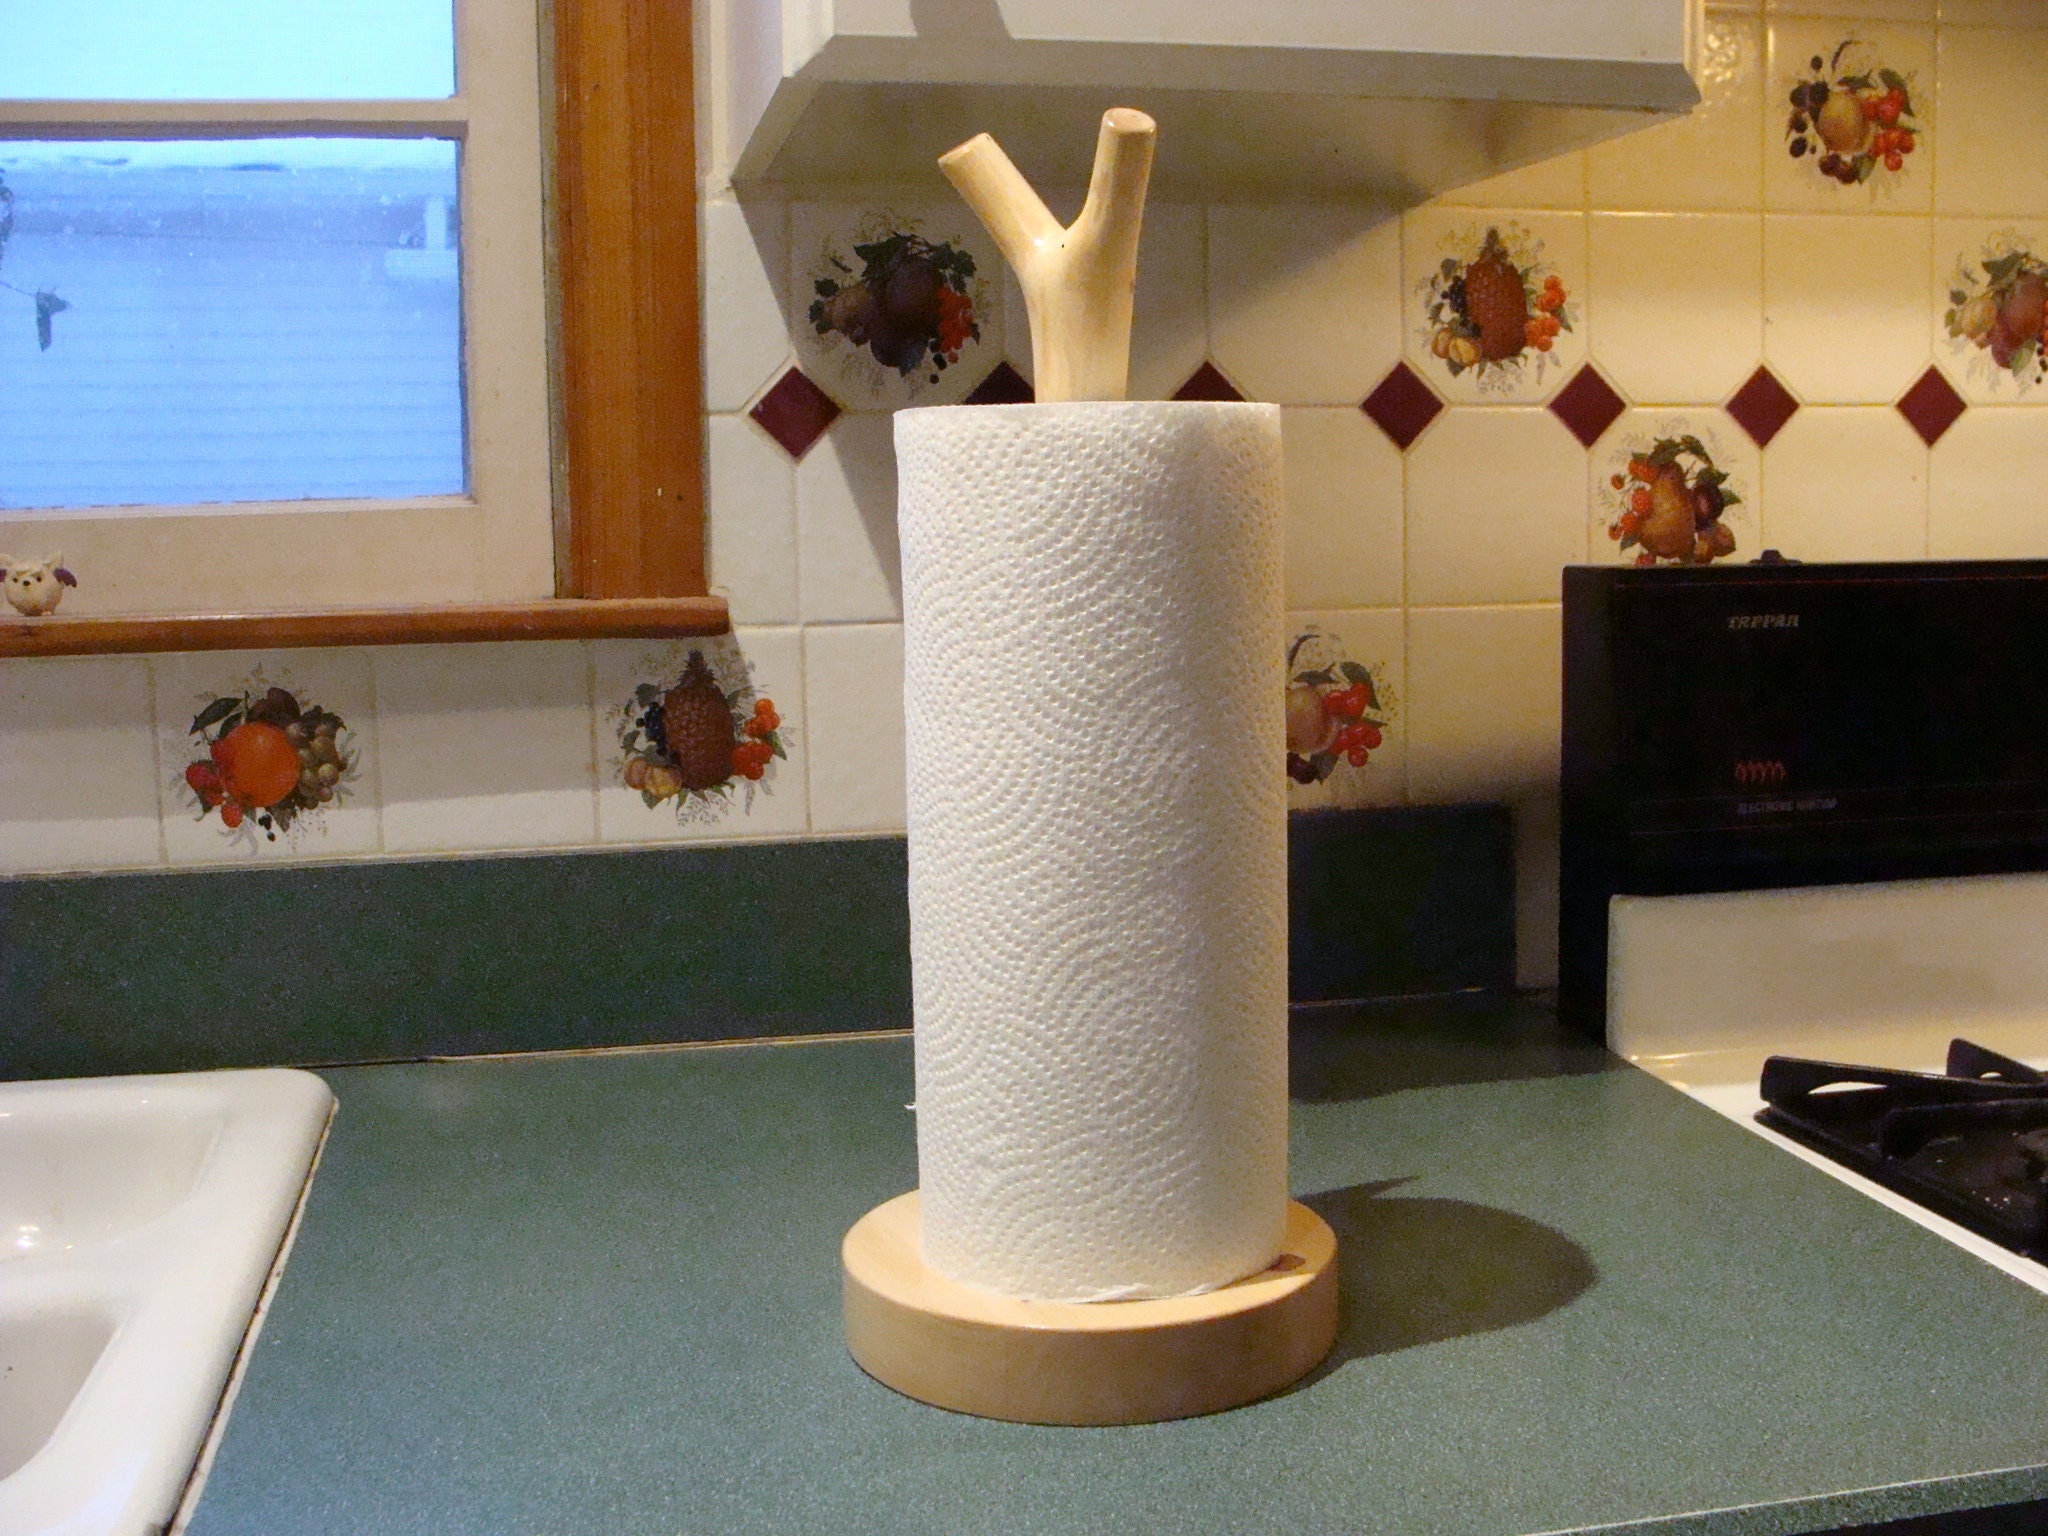 Olve Kitchen Paper Towel Holder Hanging Paper Towel Dispenser Cover for  Kitchen, Camping Outdoor (Mint)